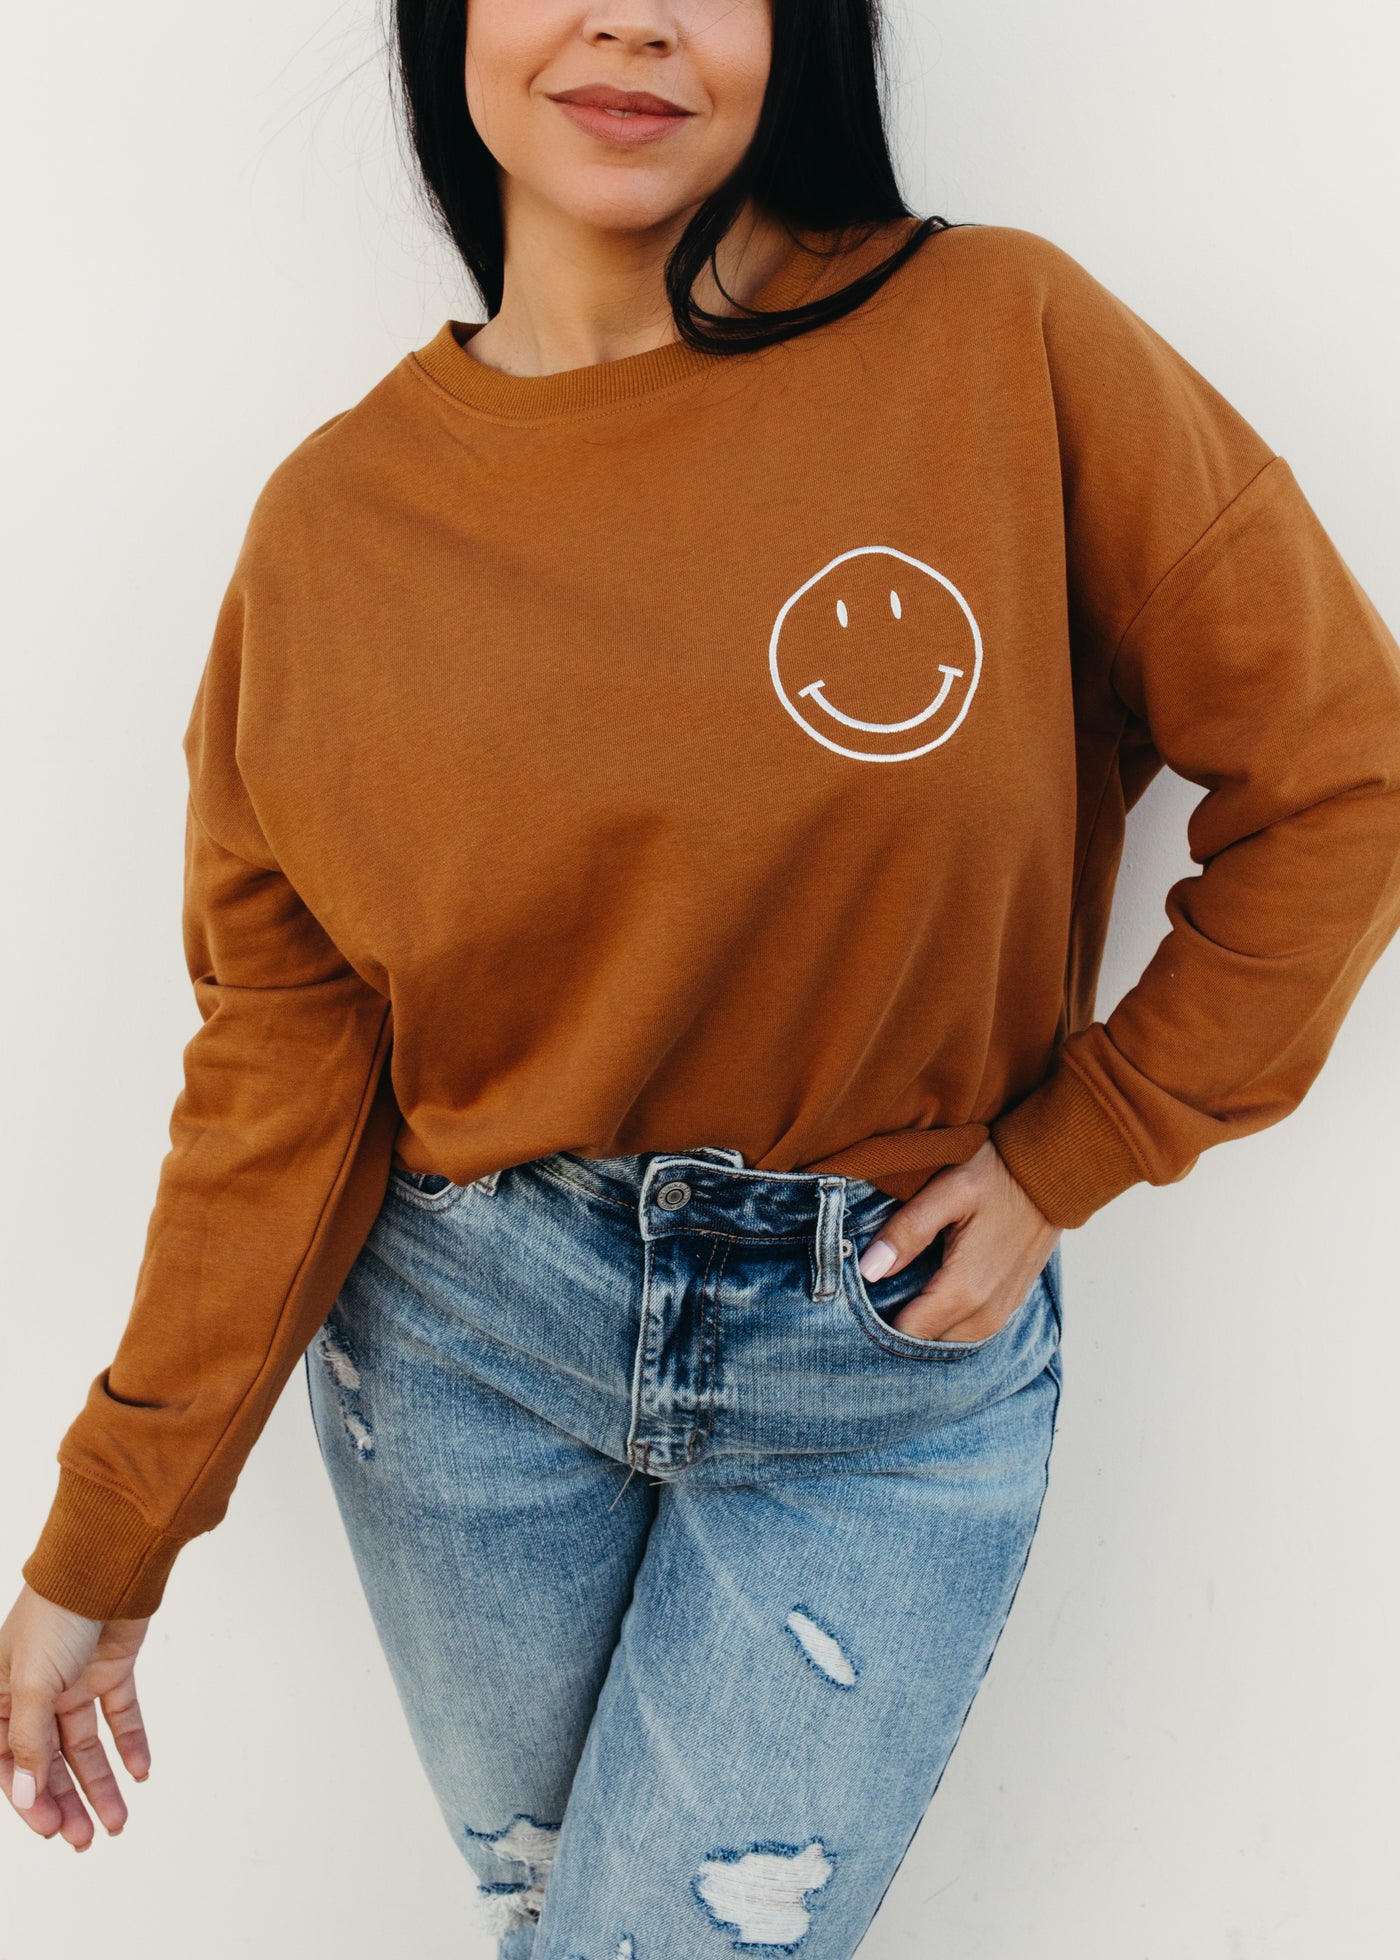 Happy & You Know It  - Smiley Face Sweatshirt